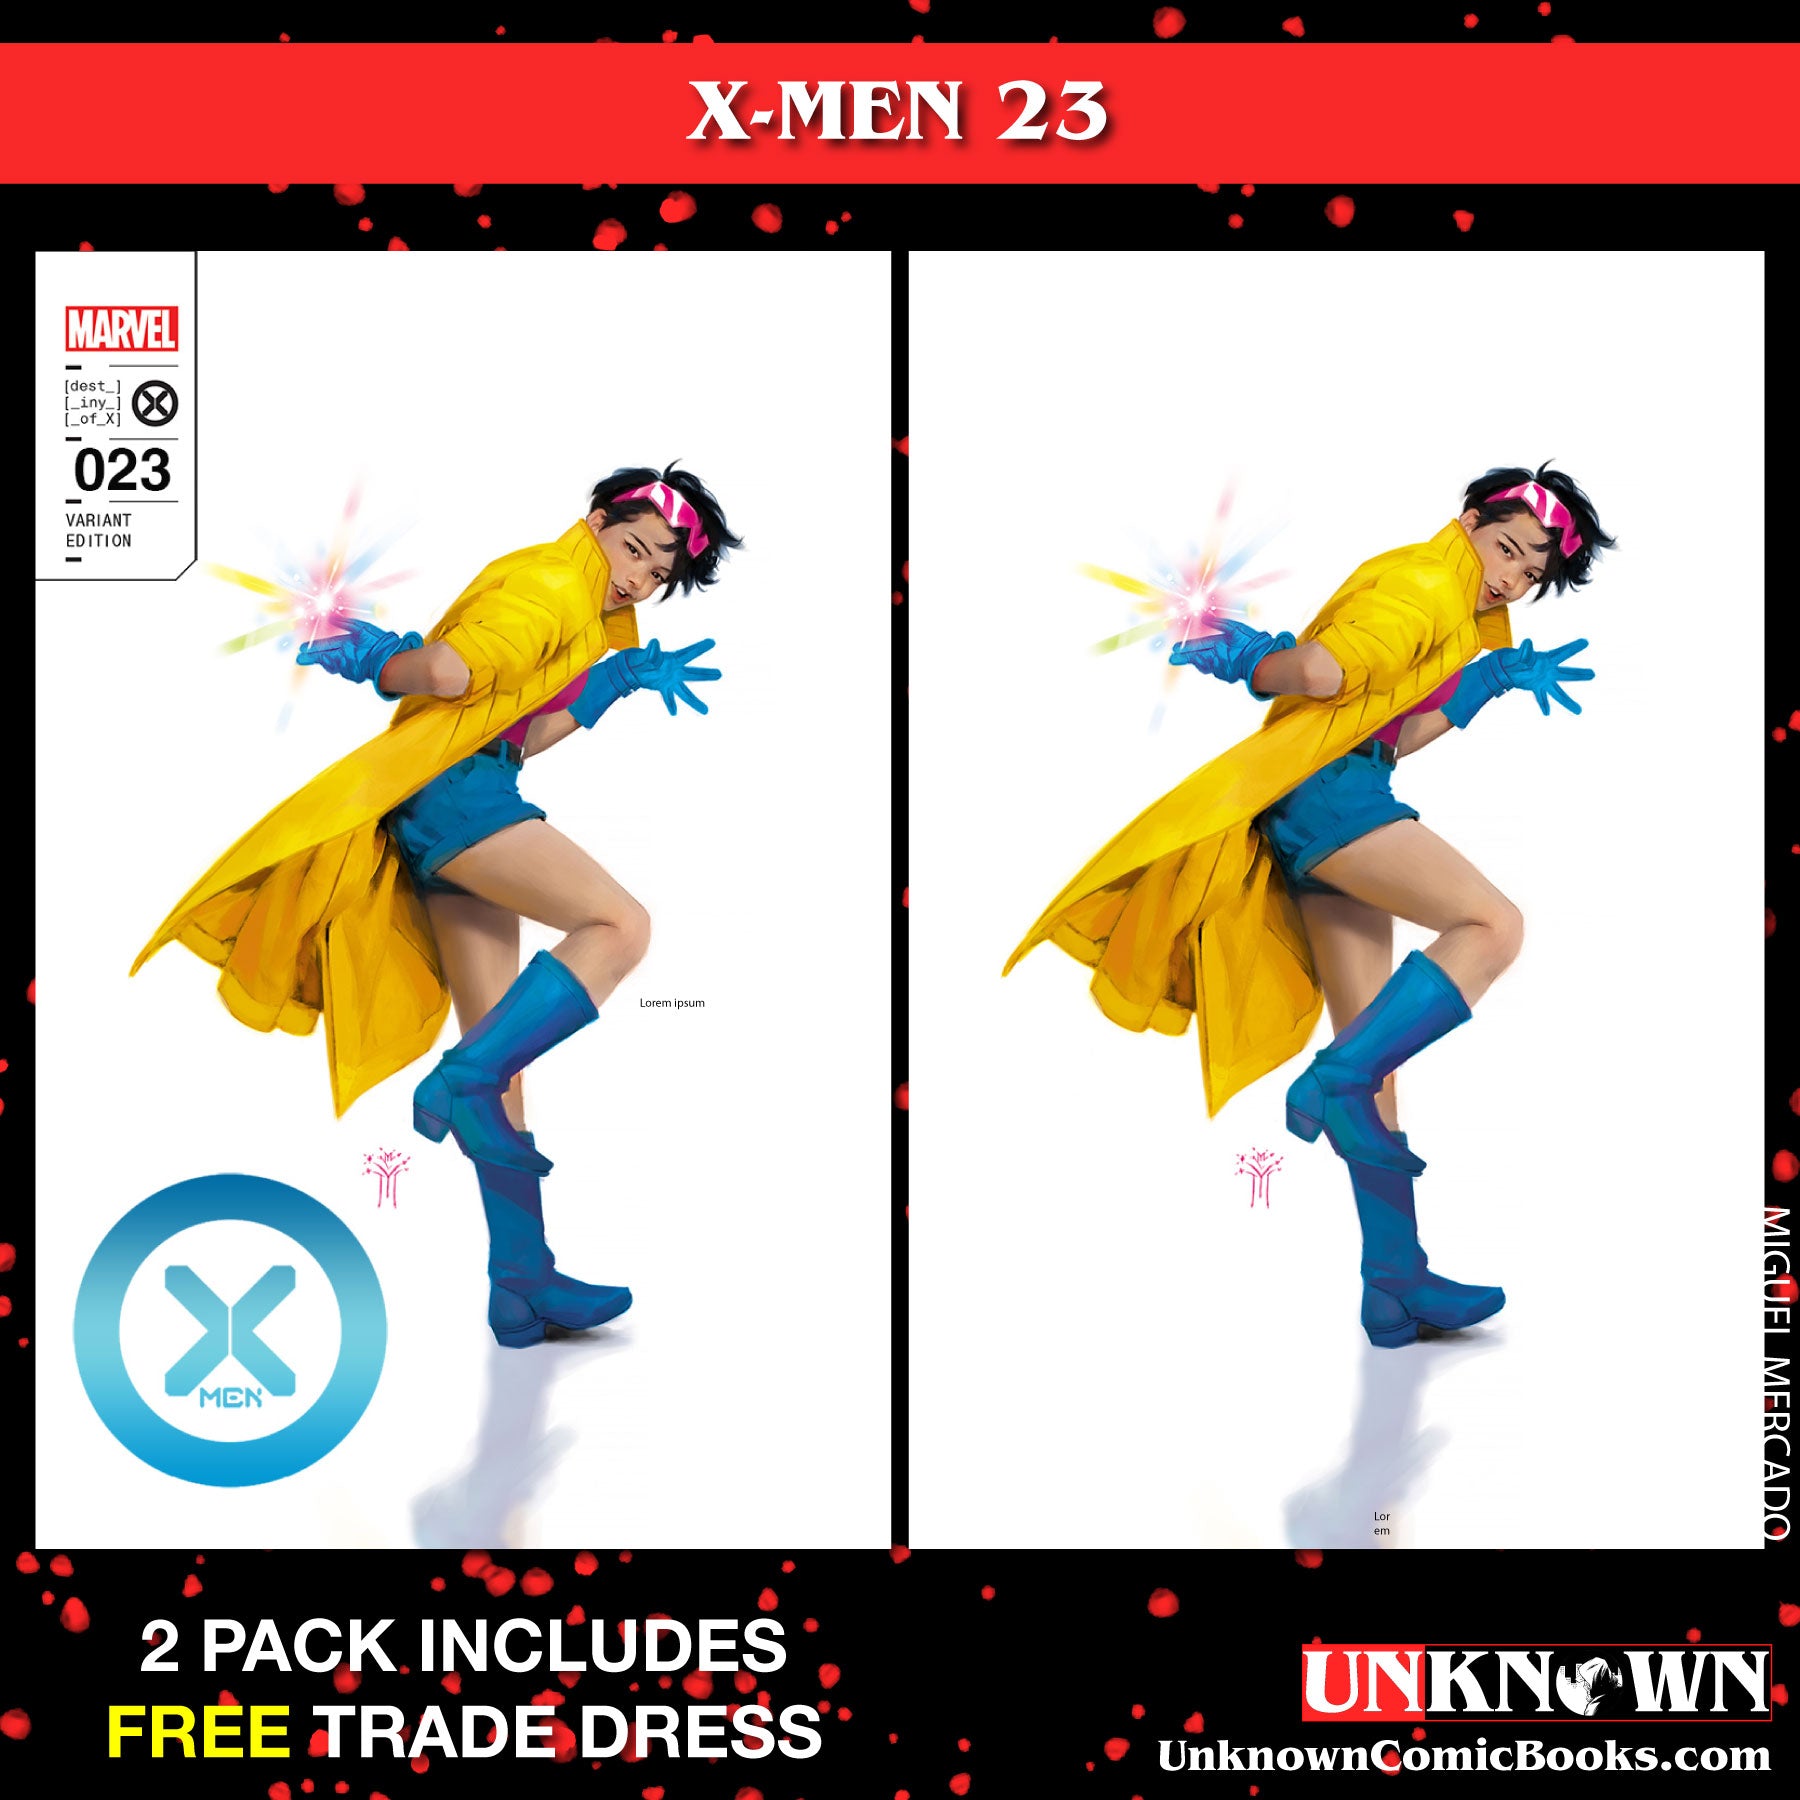 [2 PACK] **FREE TRADE DRESS** X-MEN #23 UNKNOWN COMICS MIGUEL MERCADO EXCLUSIVE VOGUE VAR (06/07/2023)